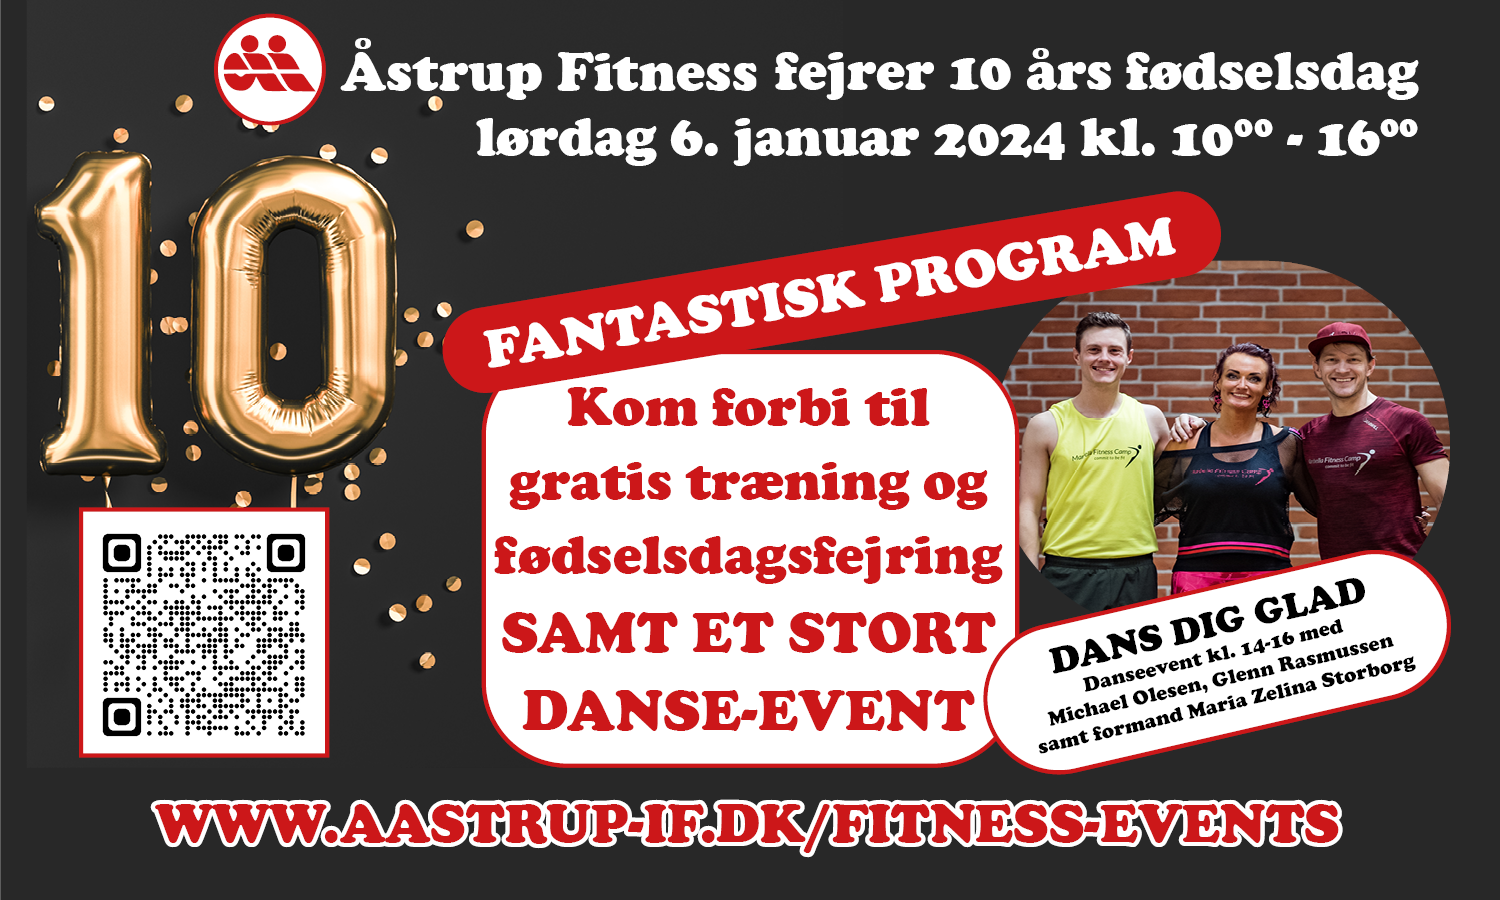 Program for Åstrup Fitness 10 års fødselsdag